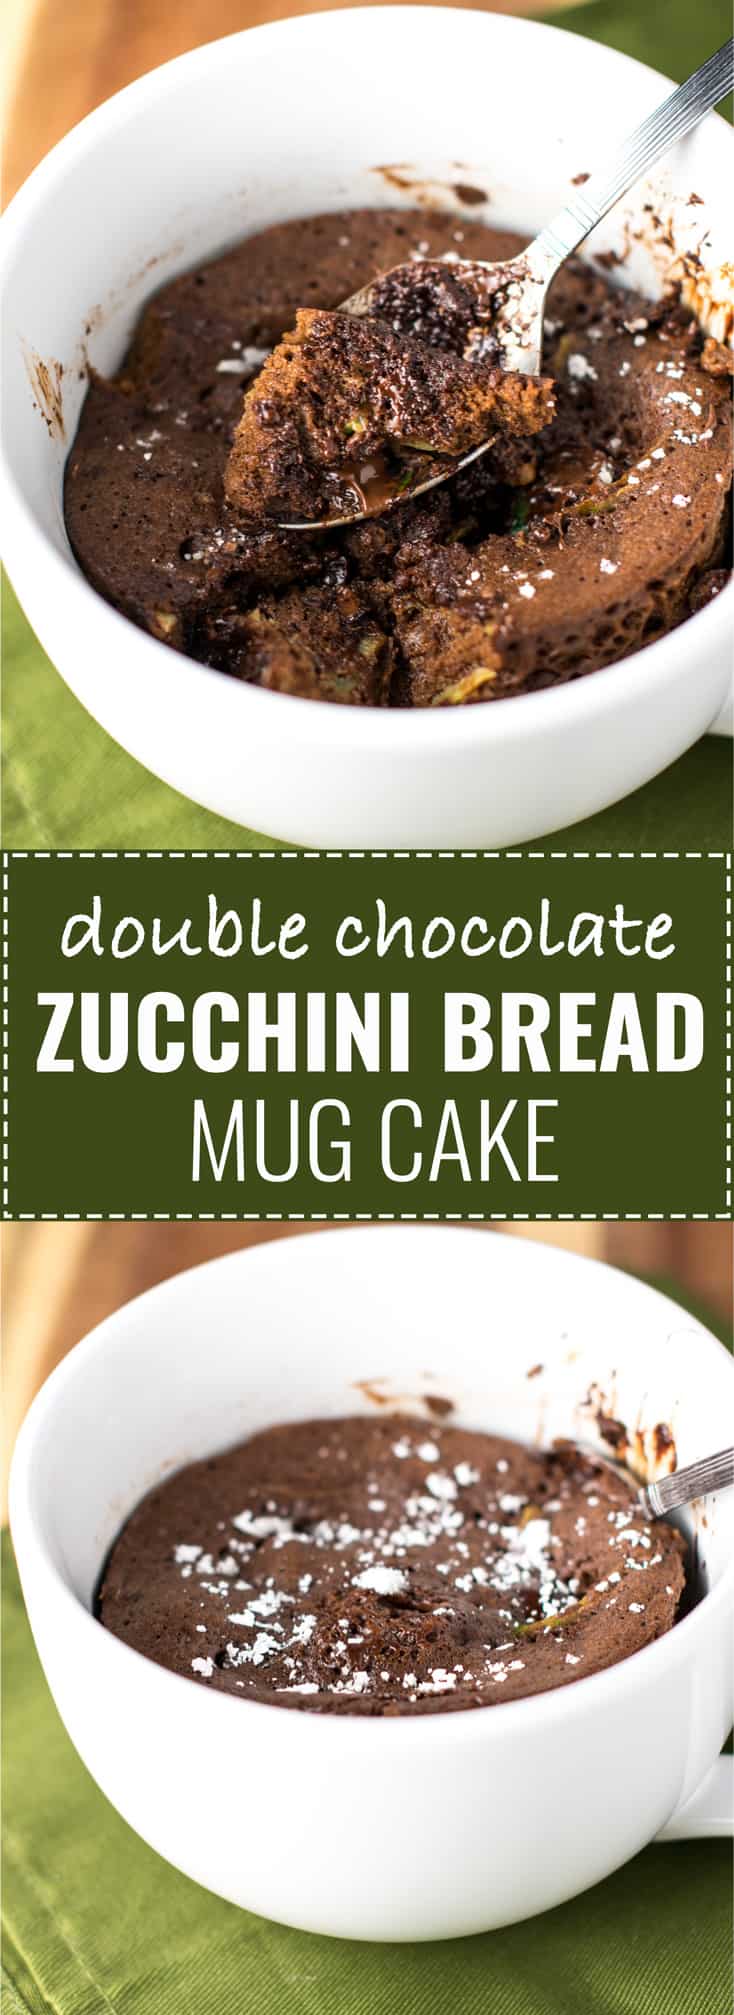 double chocolate zucchini bread mug cake recipe #mugcake #dessert #doublechocolate